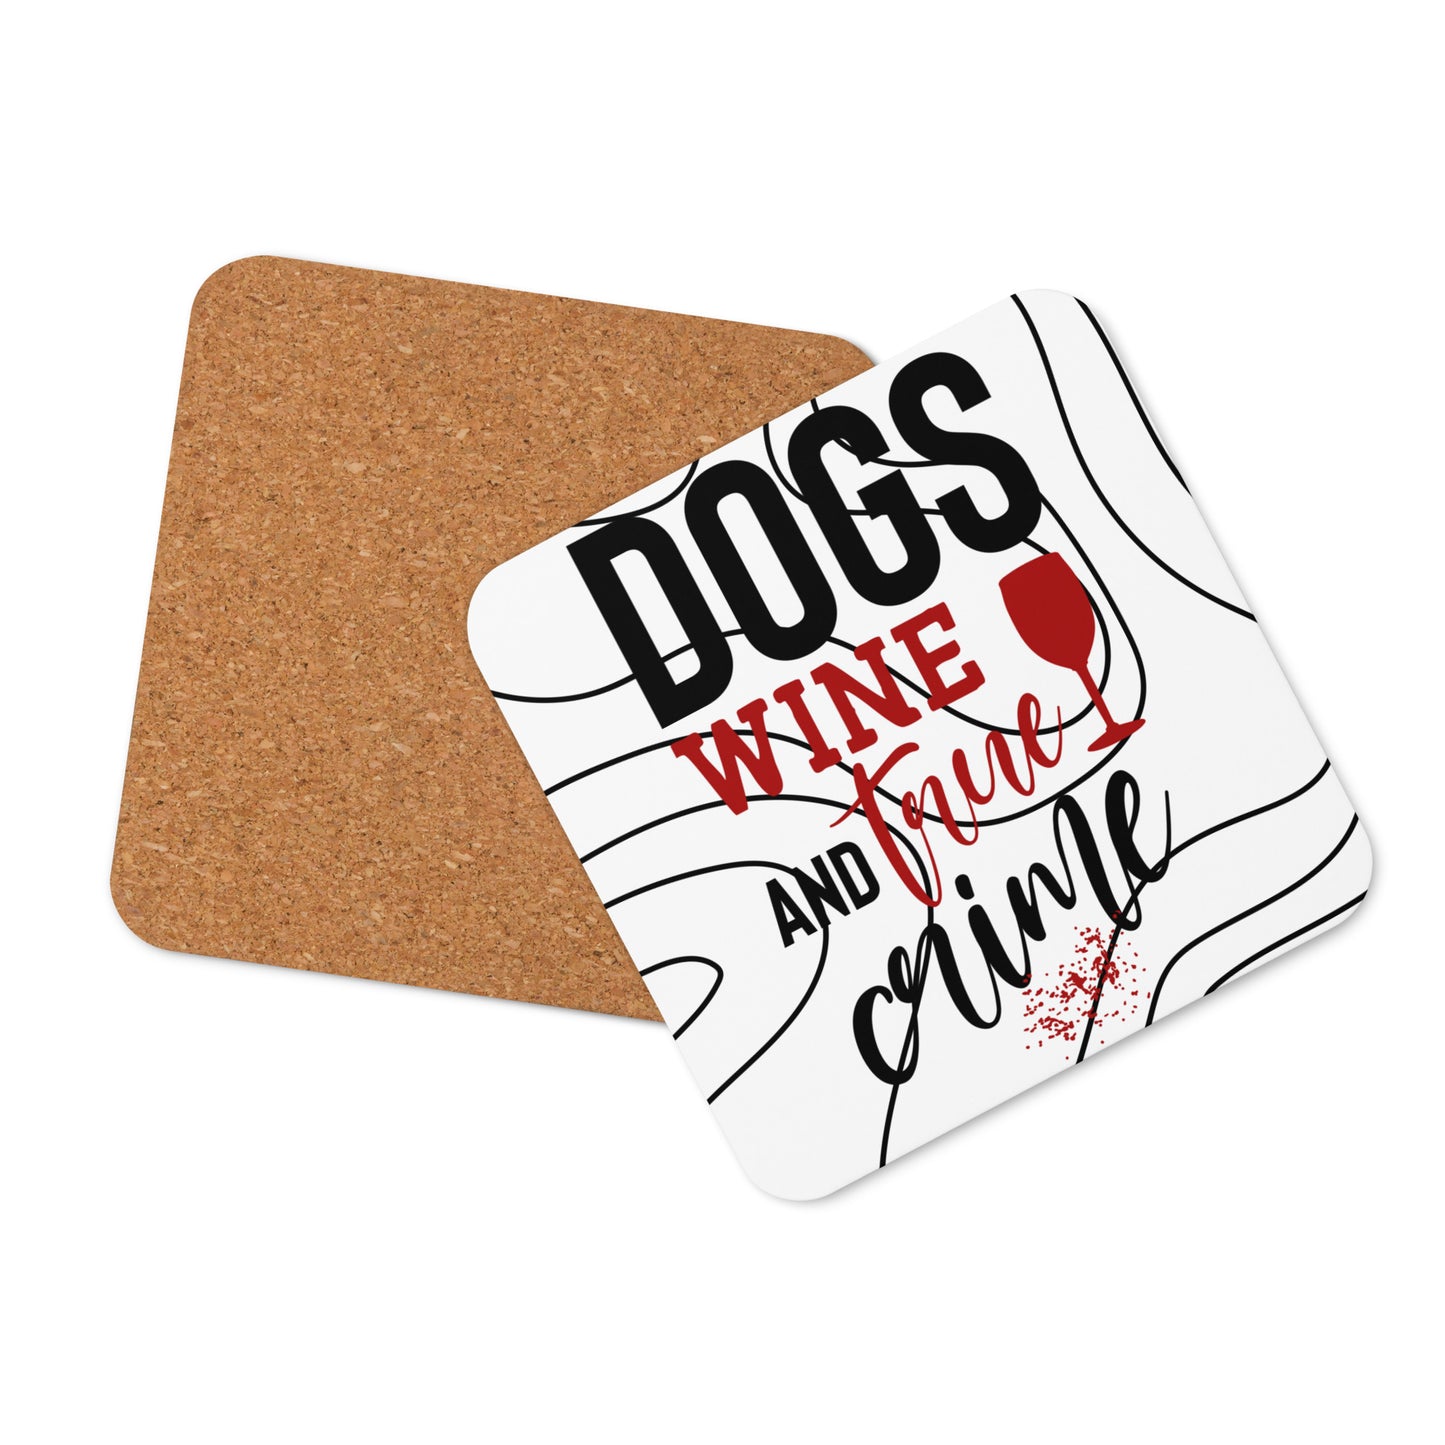 Dogs Wine and True Crime Cork-back coaster